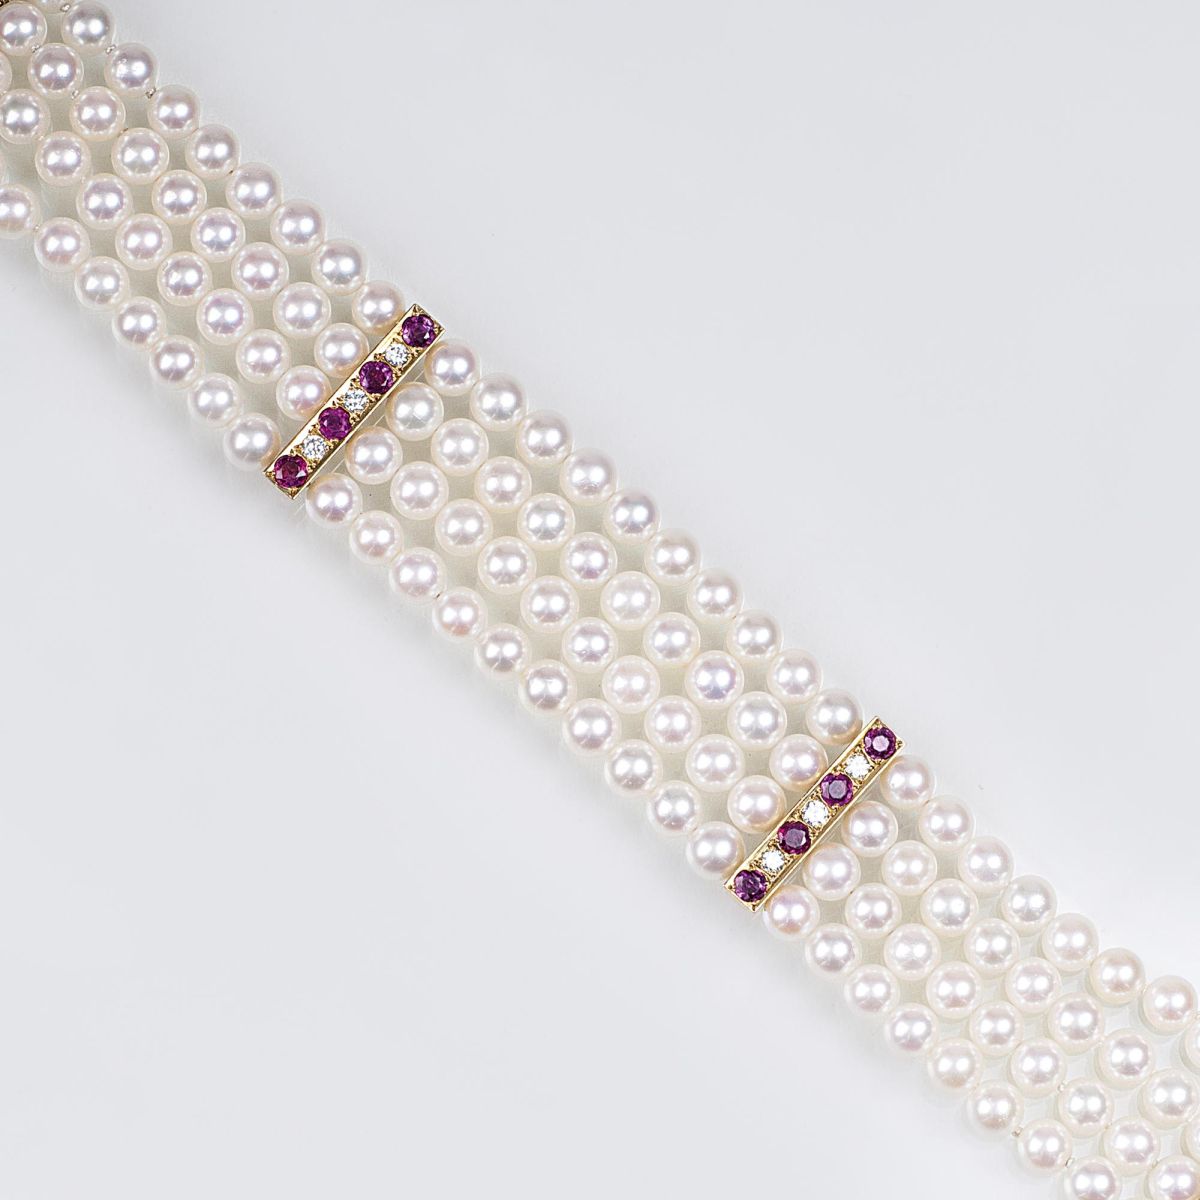 A Pear Bracelet with precious Ruby Diamond Settings